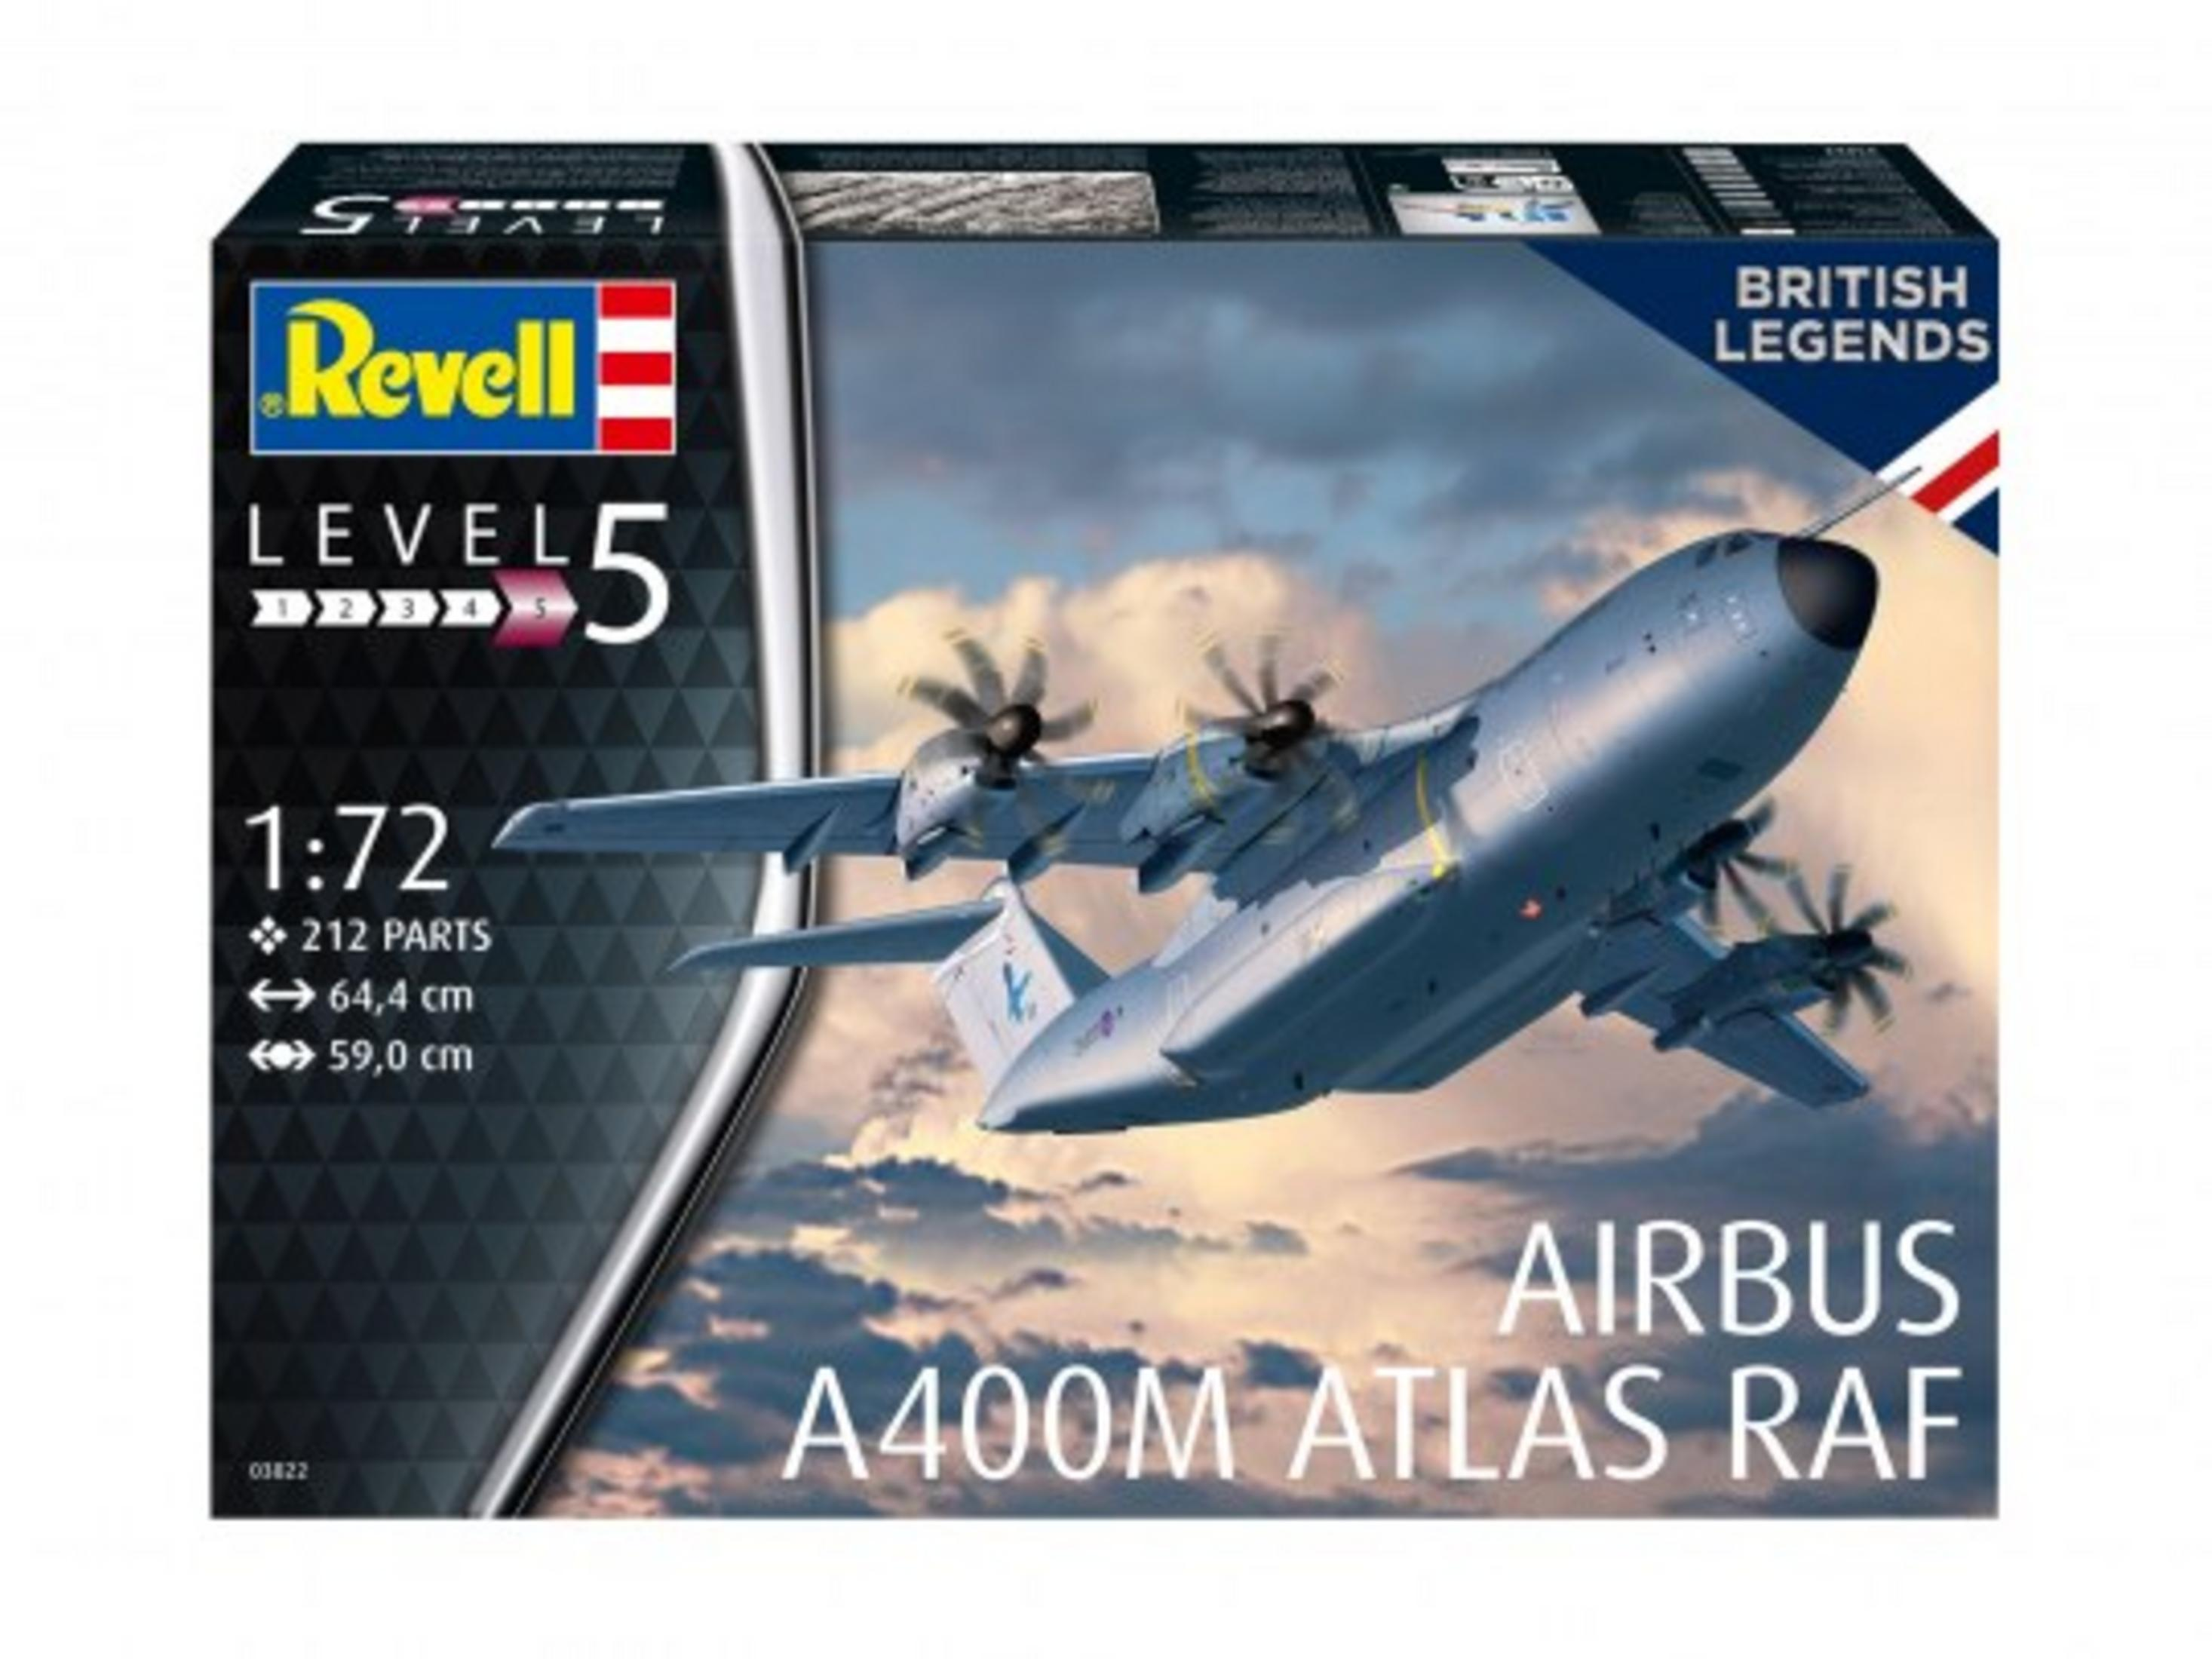 ATLAS 03822 REVELL Modellbausatz A400M RAF AIRBUS